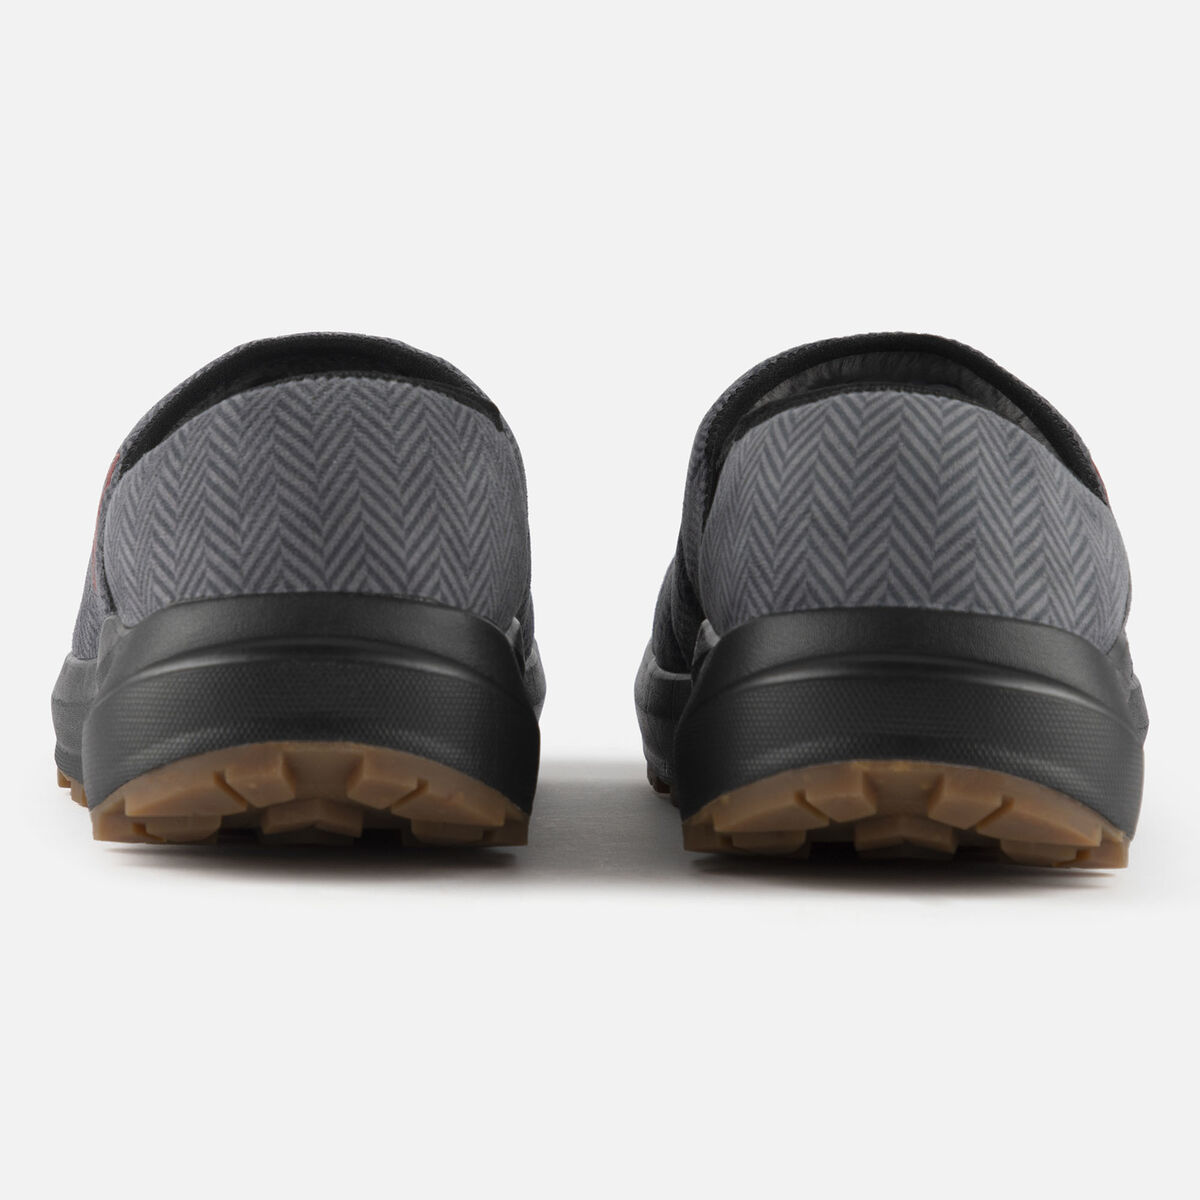 Pantofole invernali Unisex Chalet nere